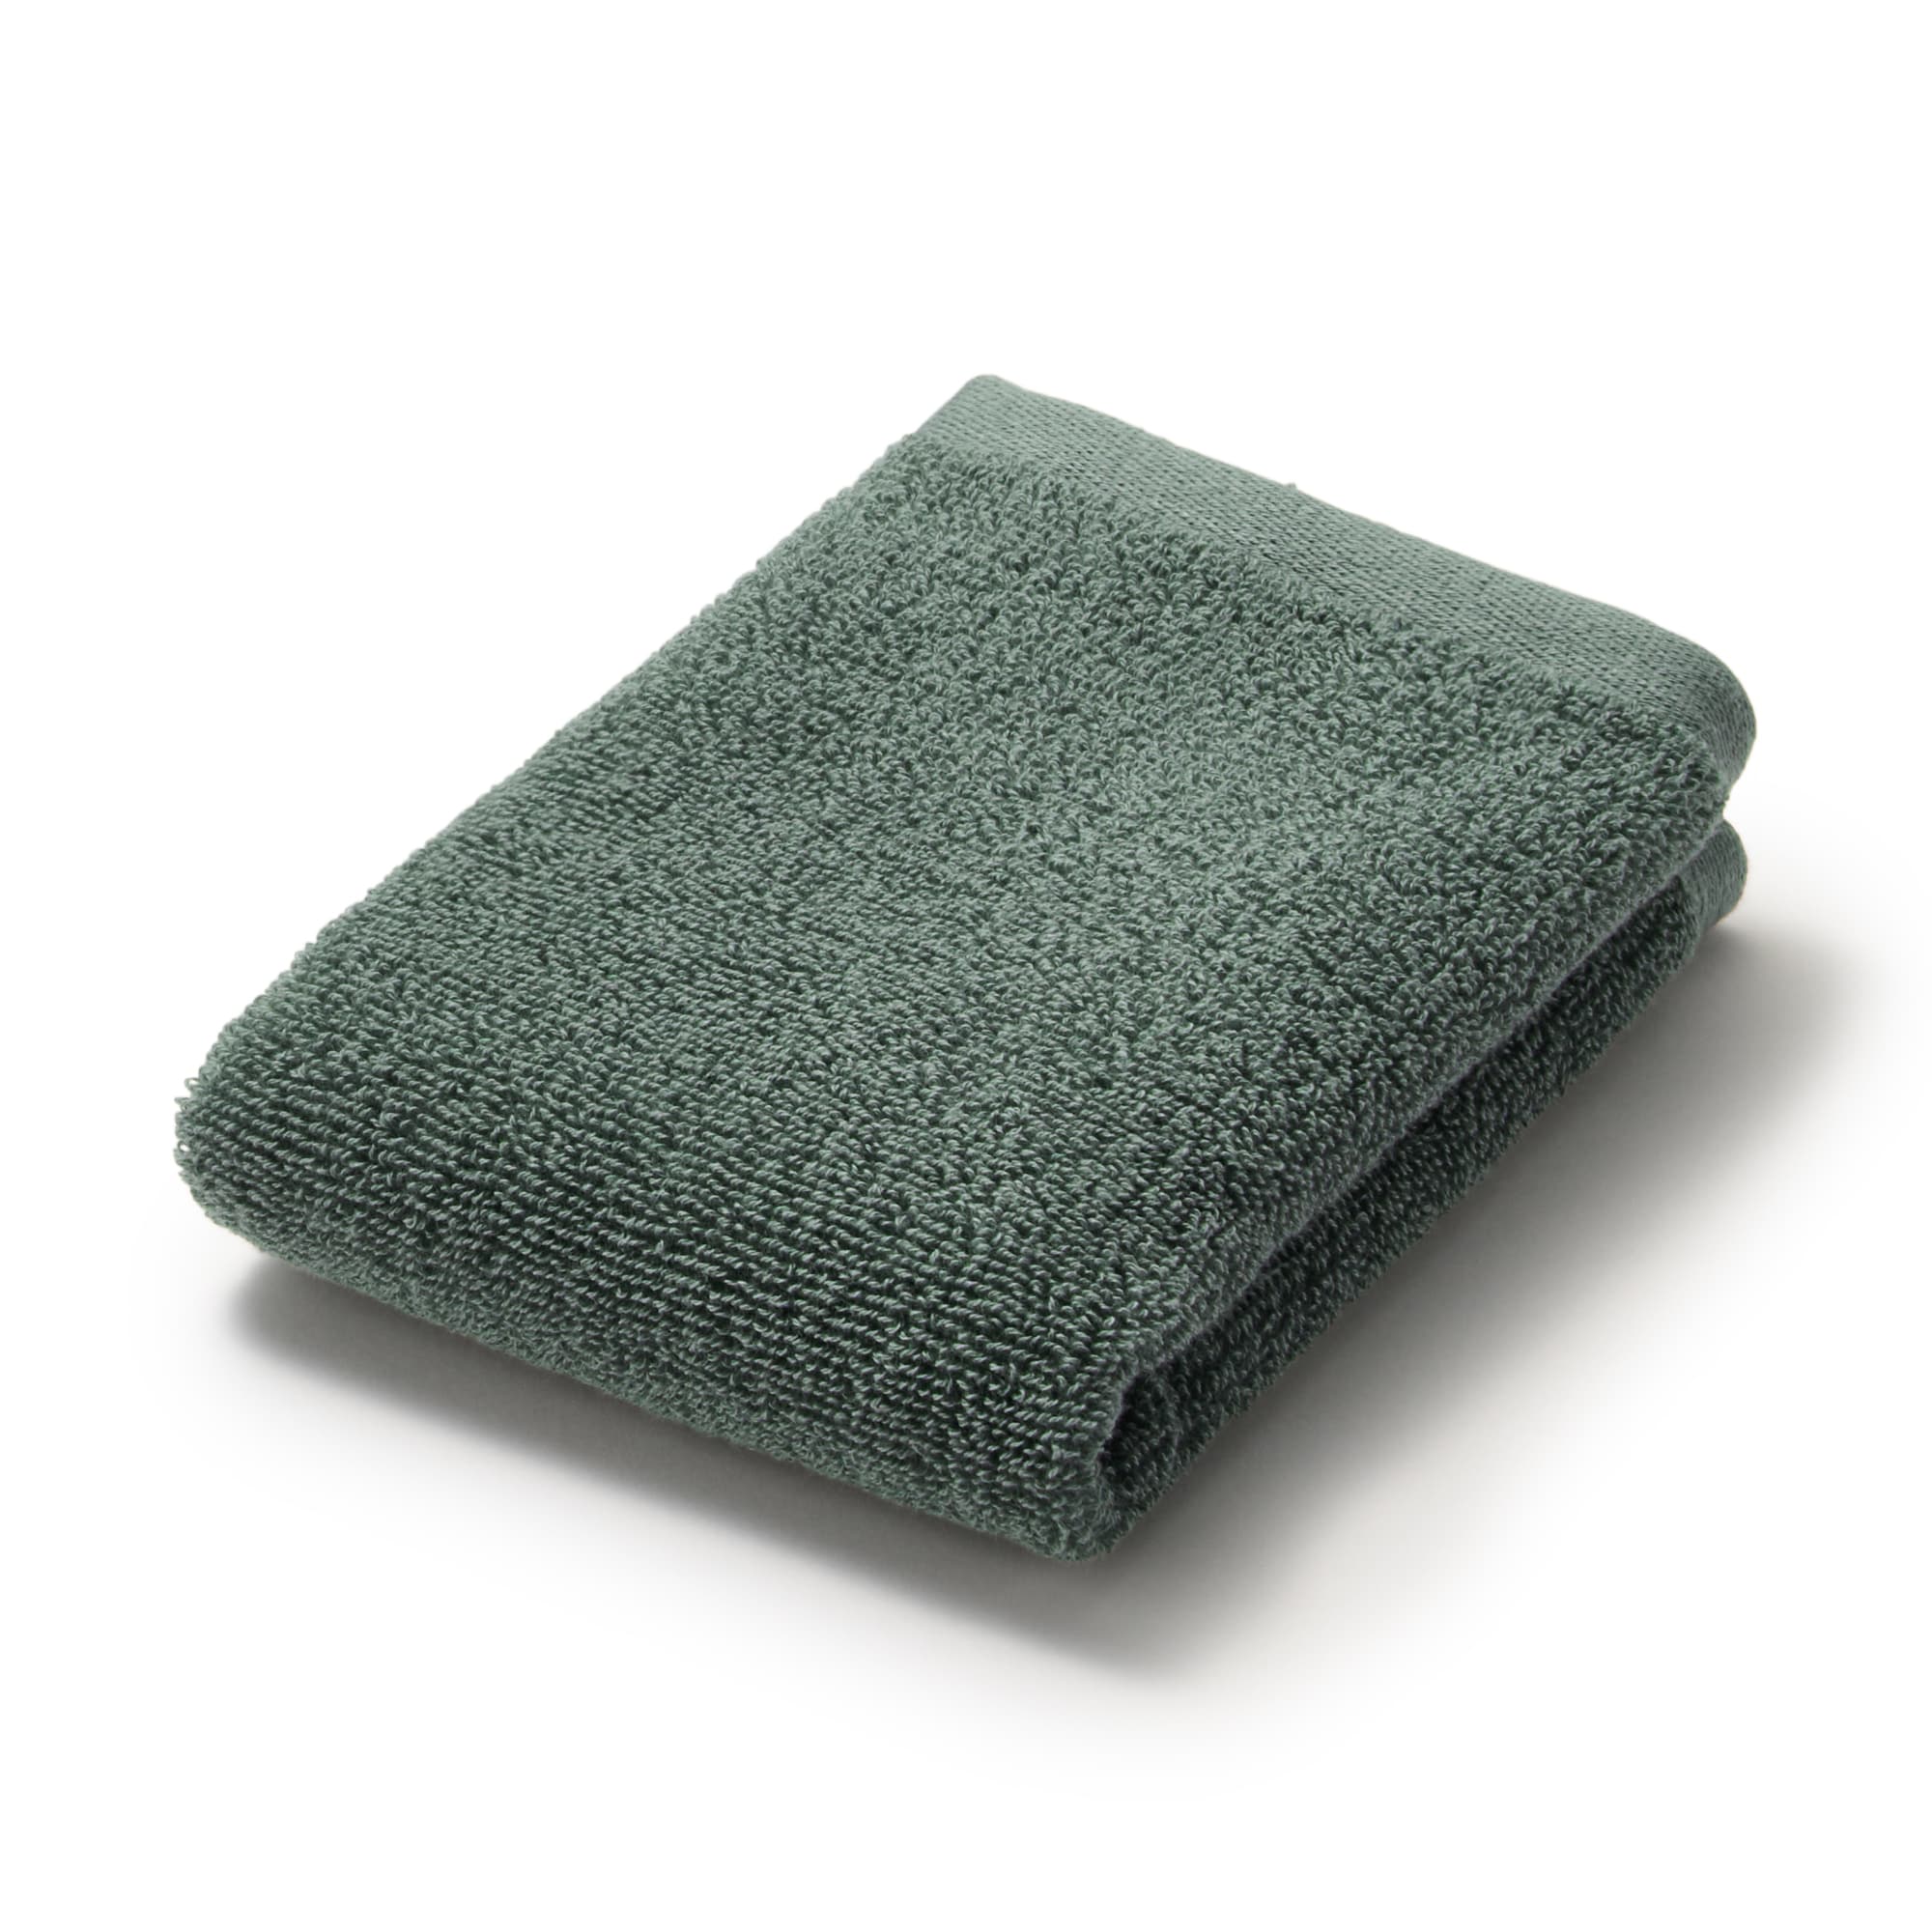 In The Bathroom Cupboard: Veeda 100% Natural Cotton Towels / Pads